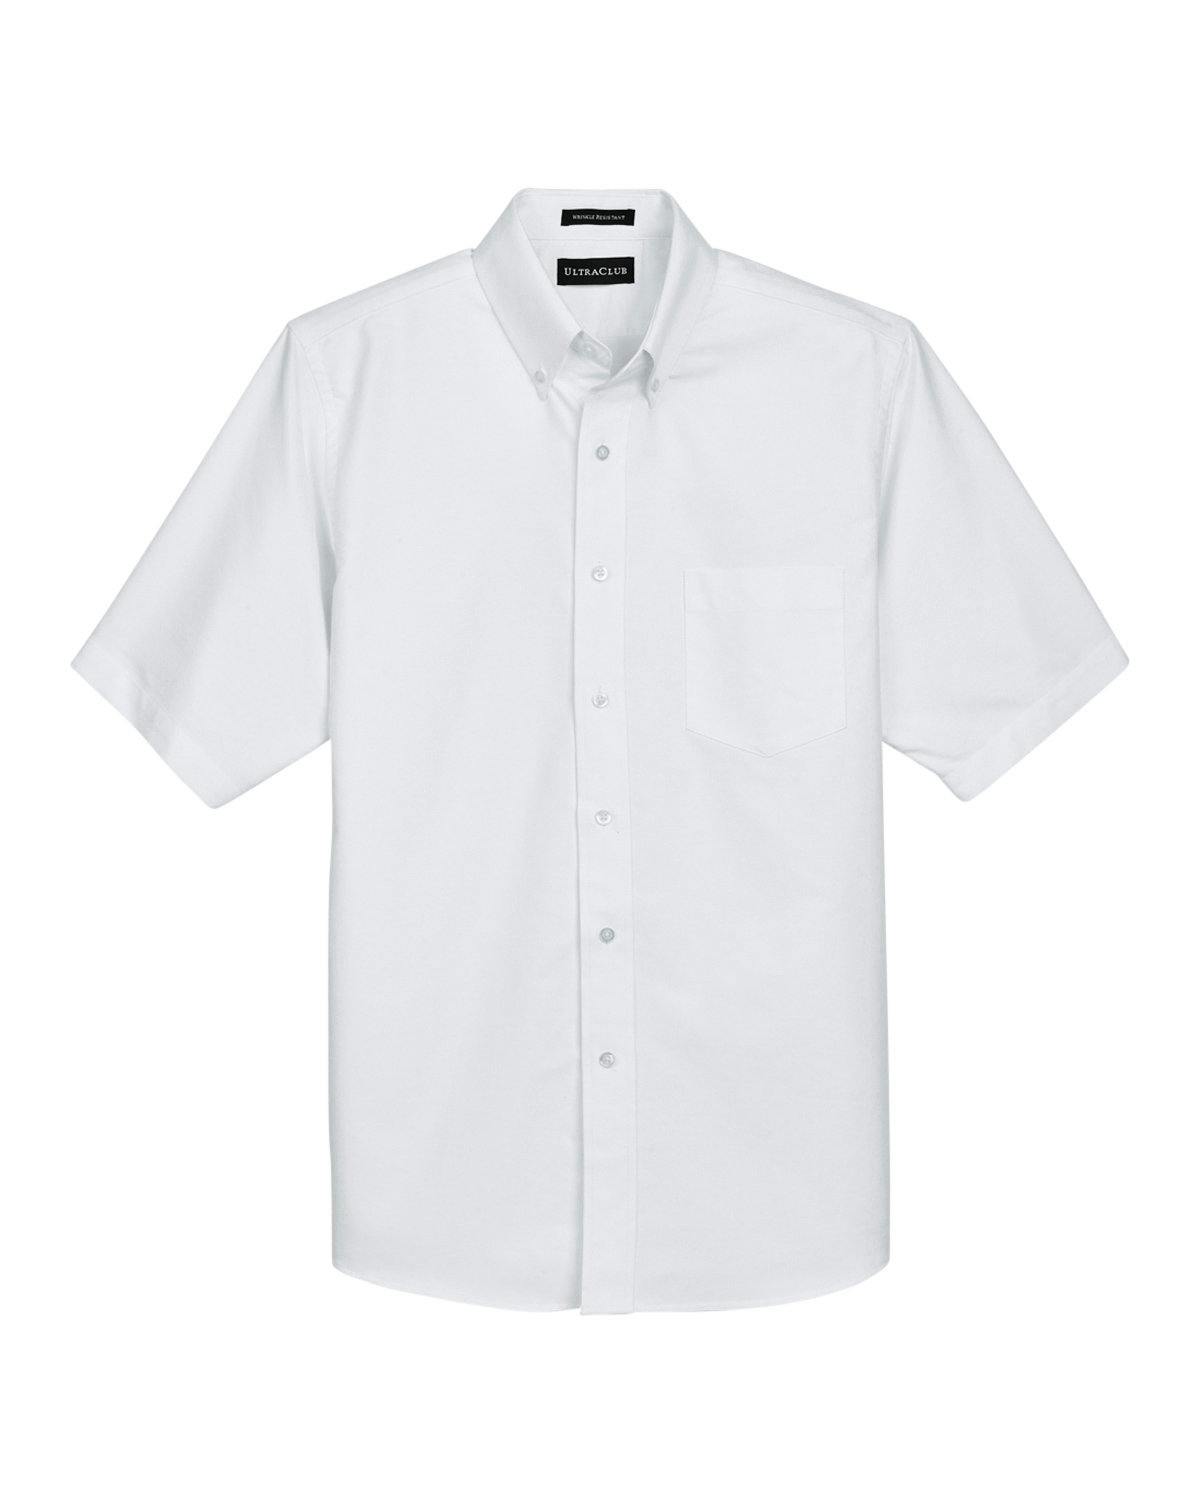 Image for Men's Classic Wrinkle-Resistant Short-Sleeve Oxford